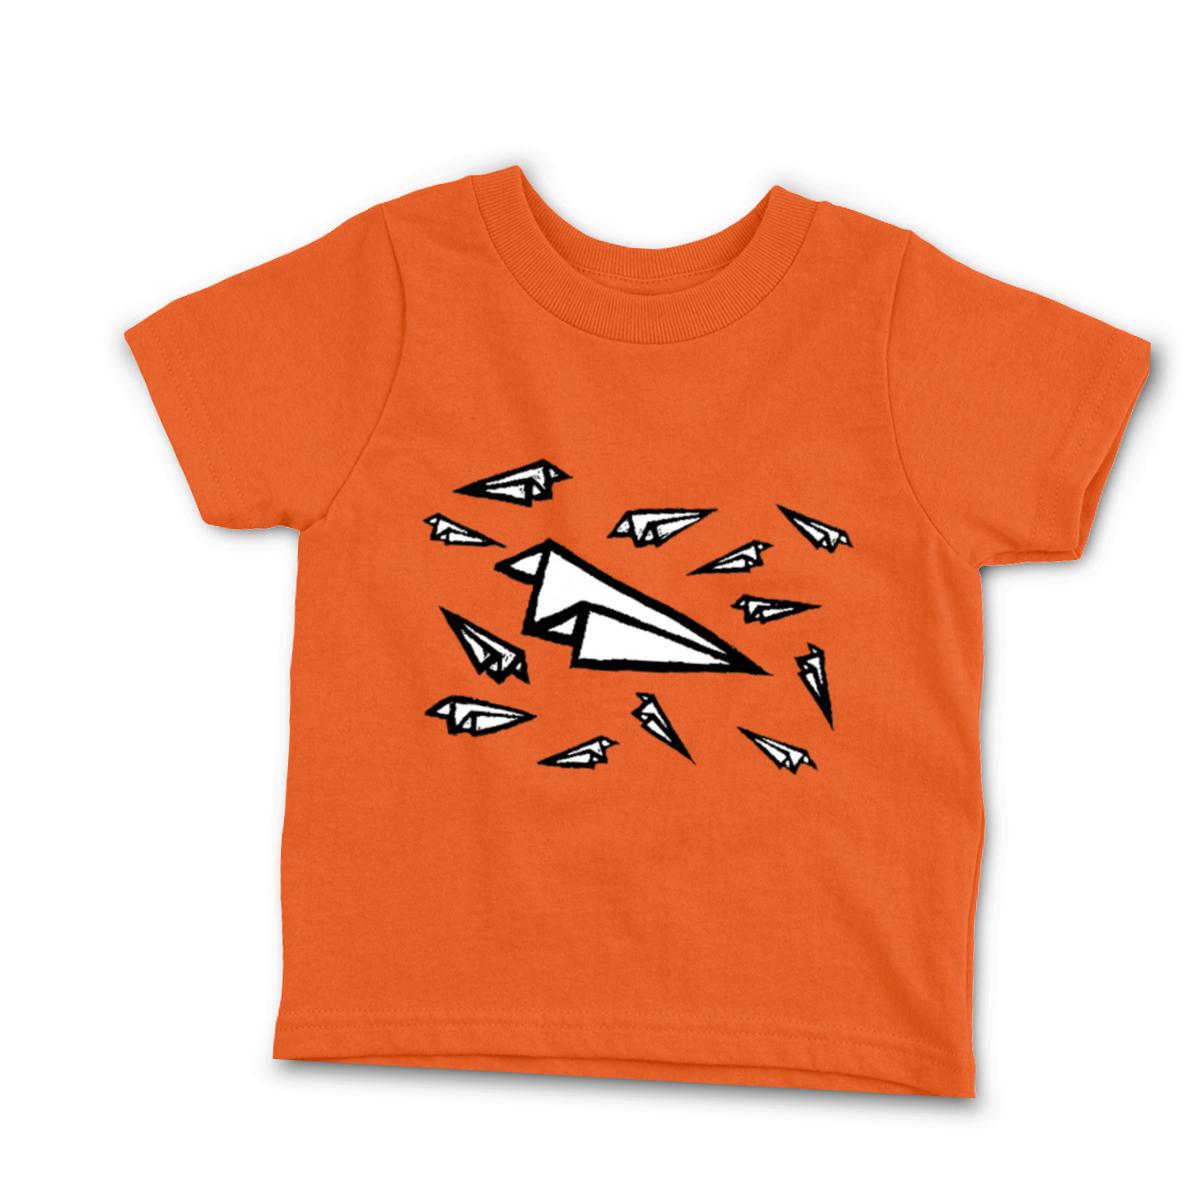 Airplane Frenzy Infant Tee 12M orange